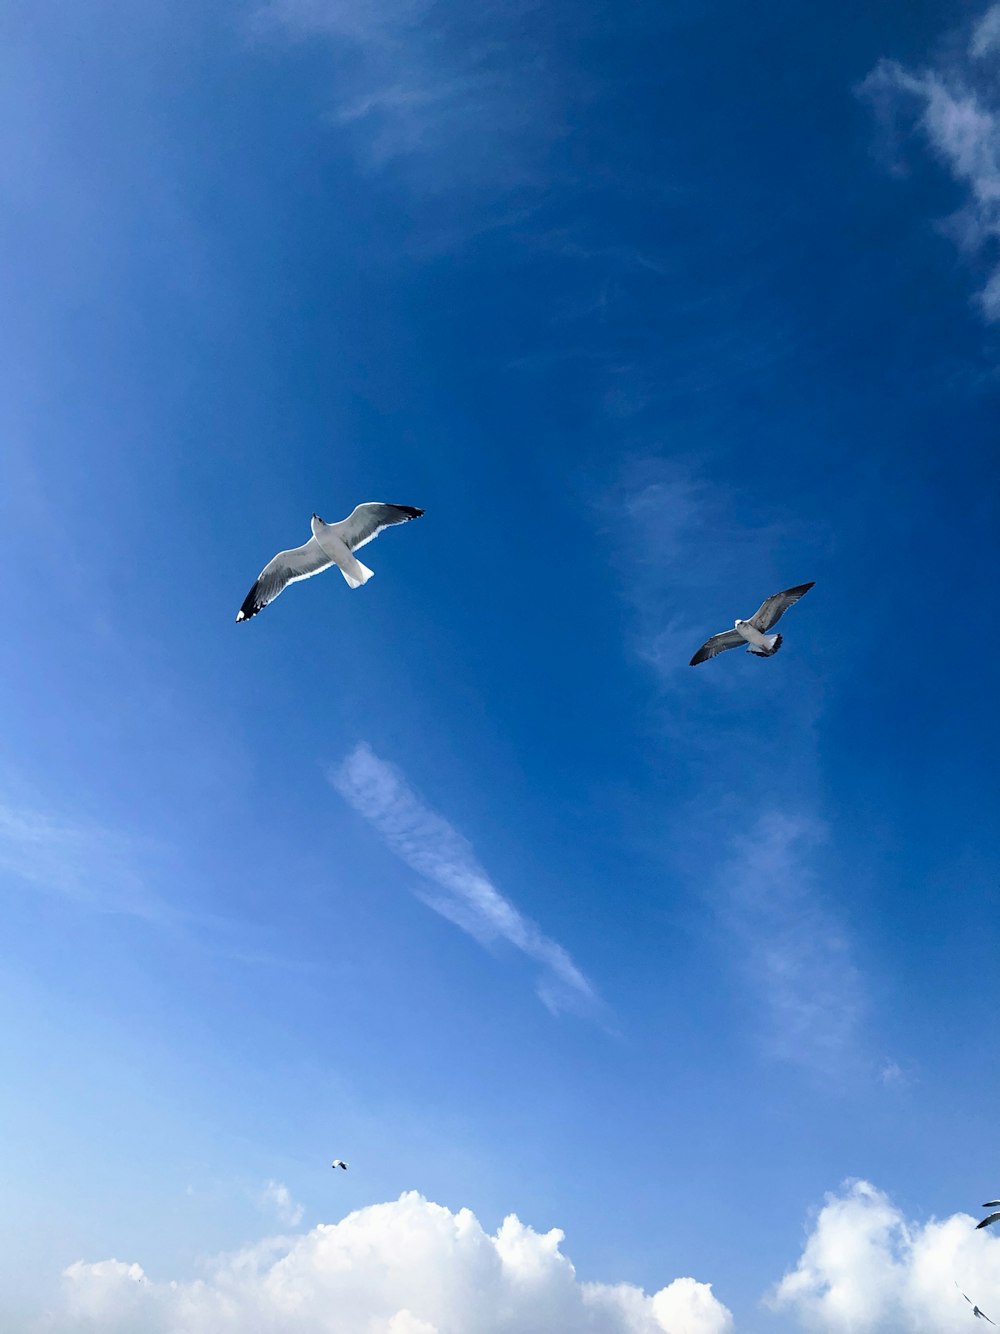 white and black birds flying under blue sky during daytime